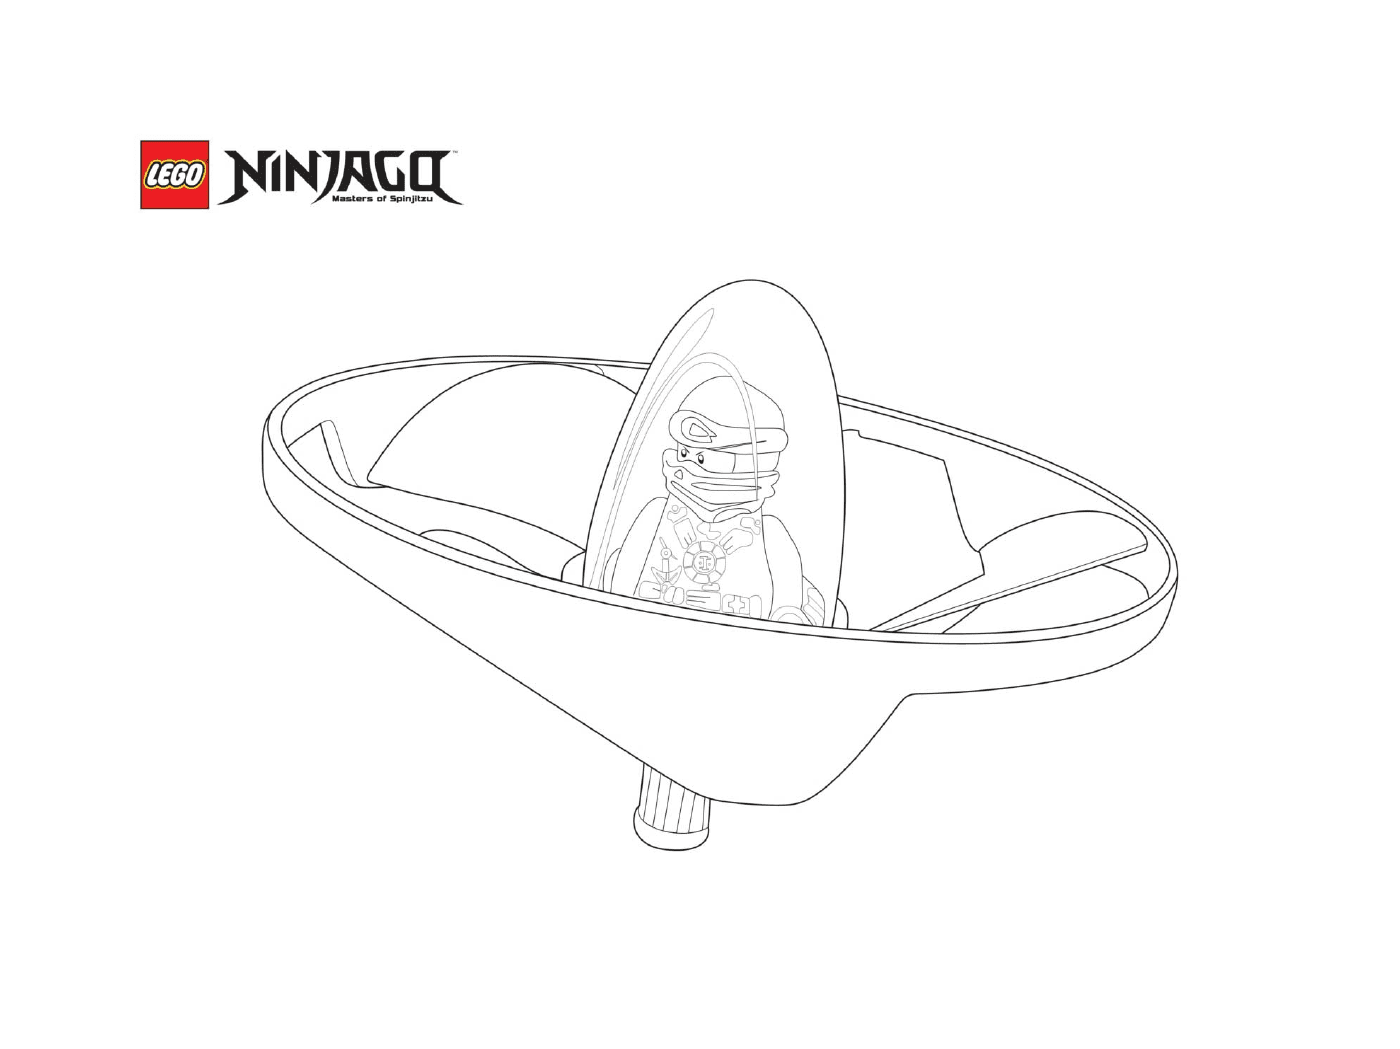  Simple ship ninjago 